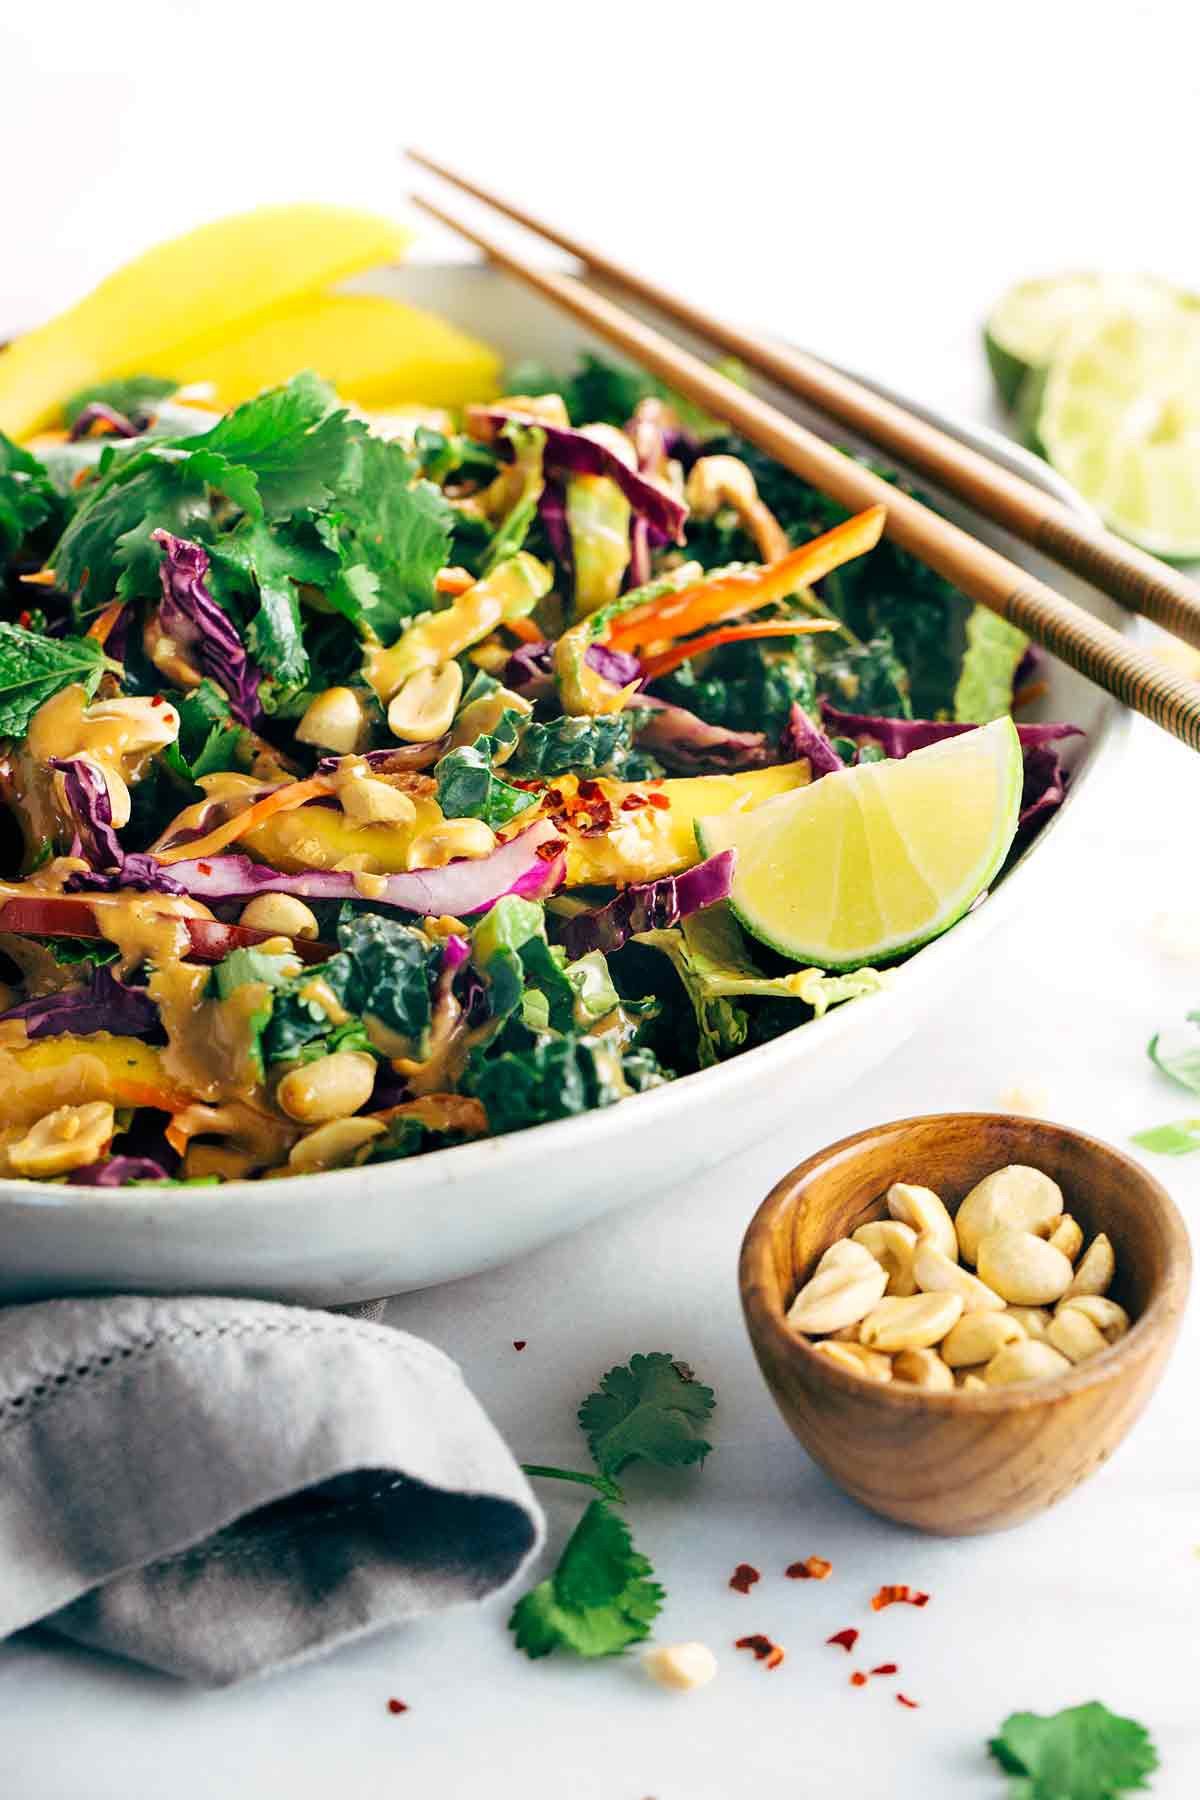 Cruciferous Vegetables Class + Crunchy Thai Salad with Peanut Dressing Samples